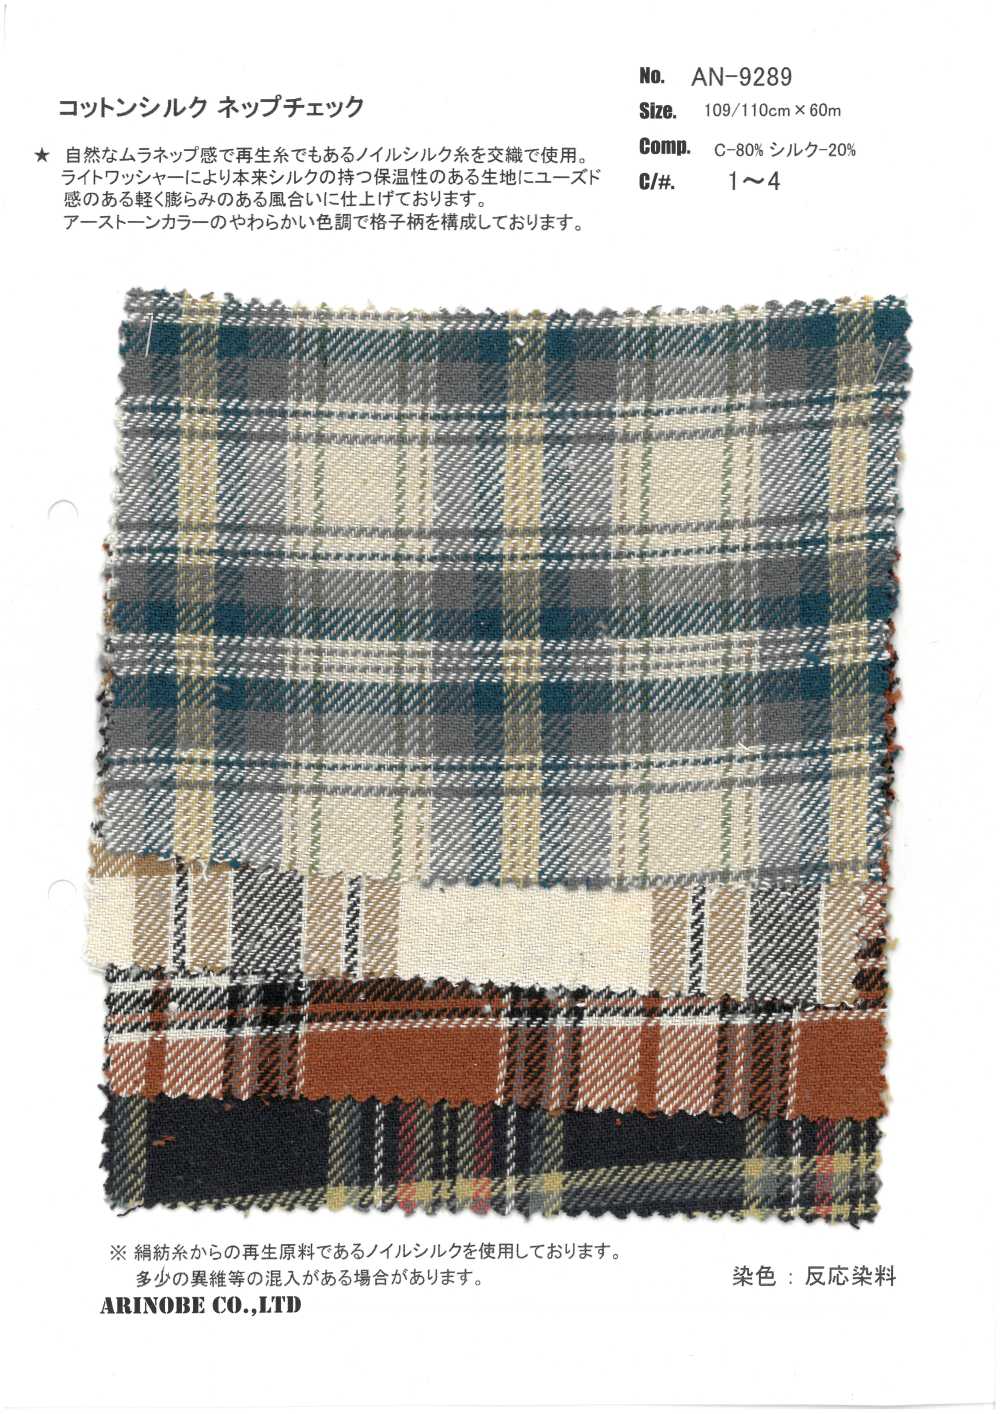 AN-9289 Baumwolle Seide Nep Check[Textilgewebe] ARINOBE CO., LTD.